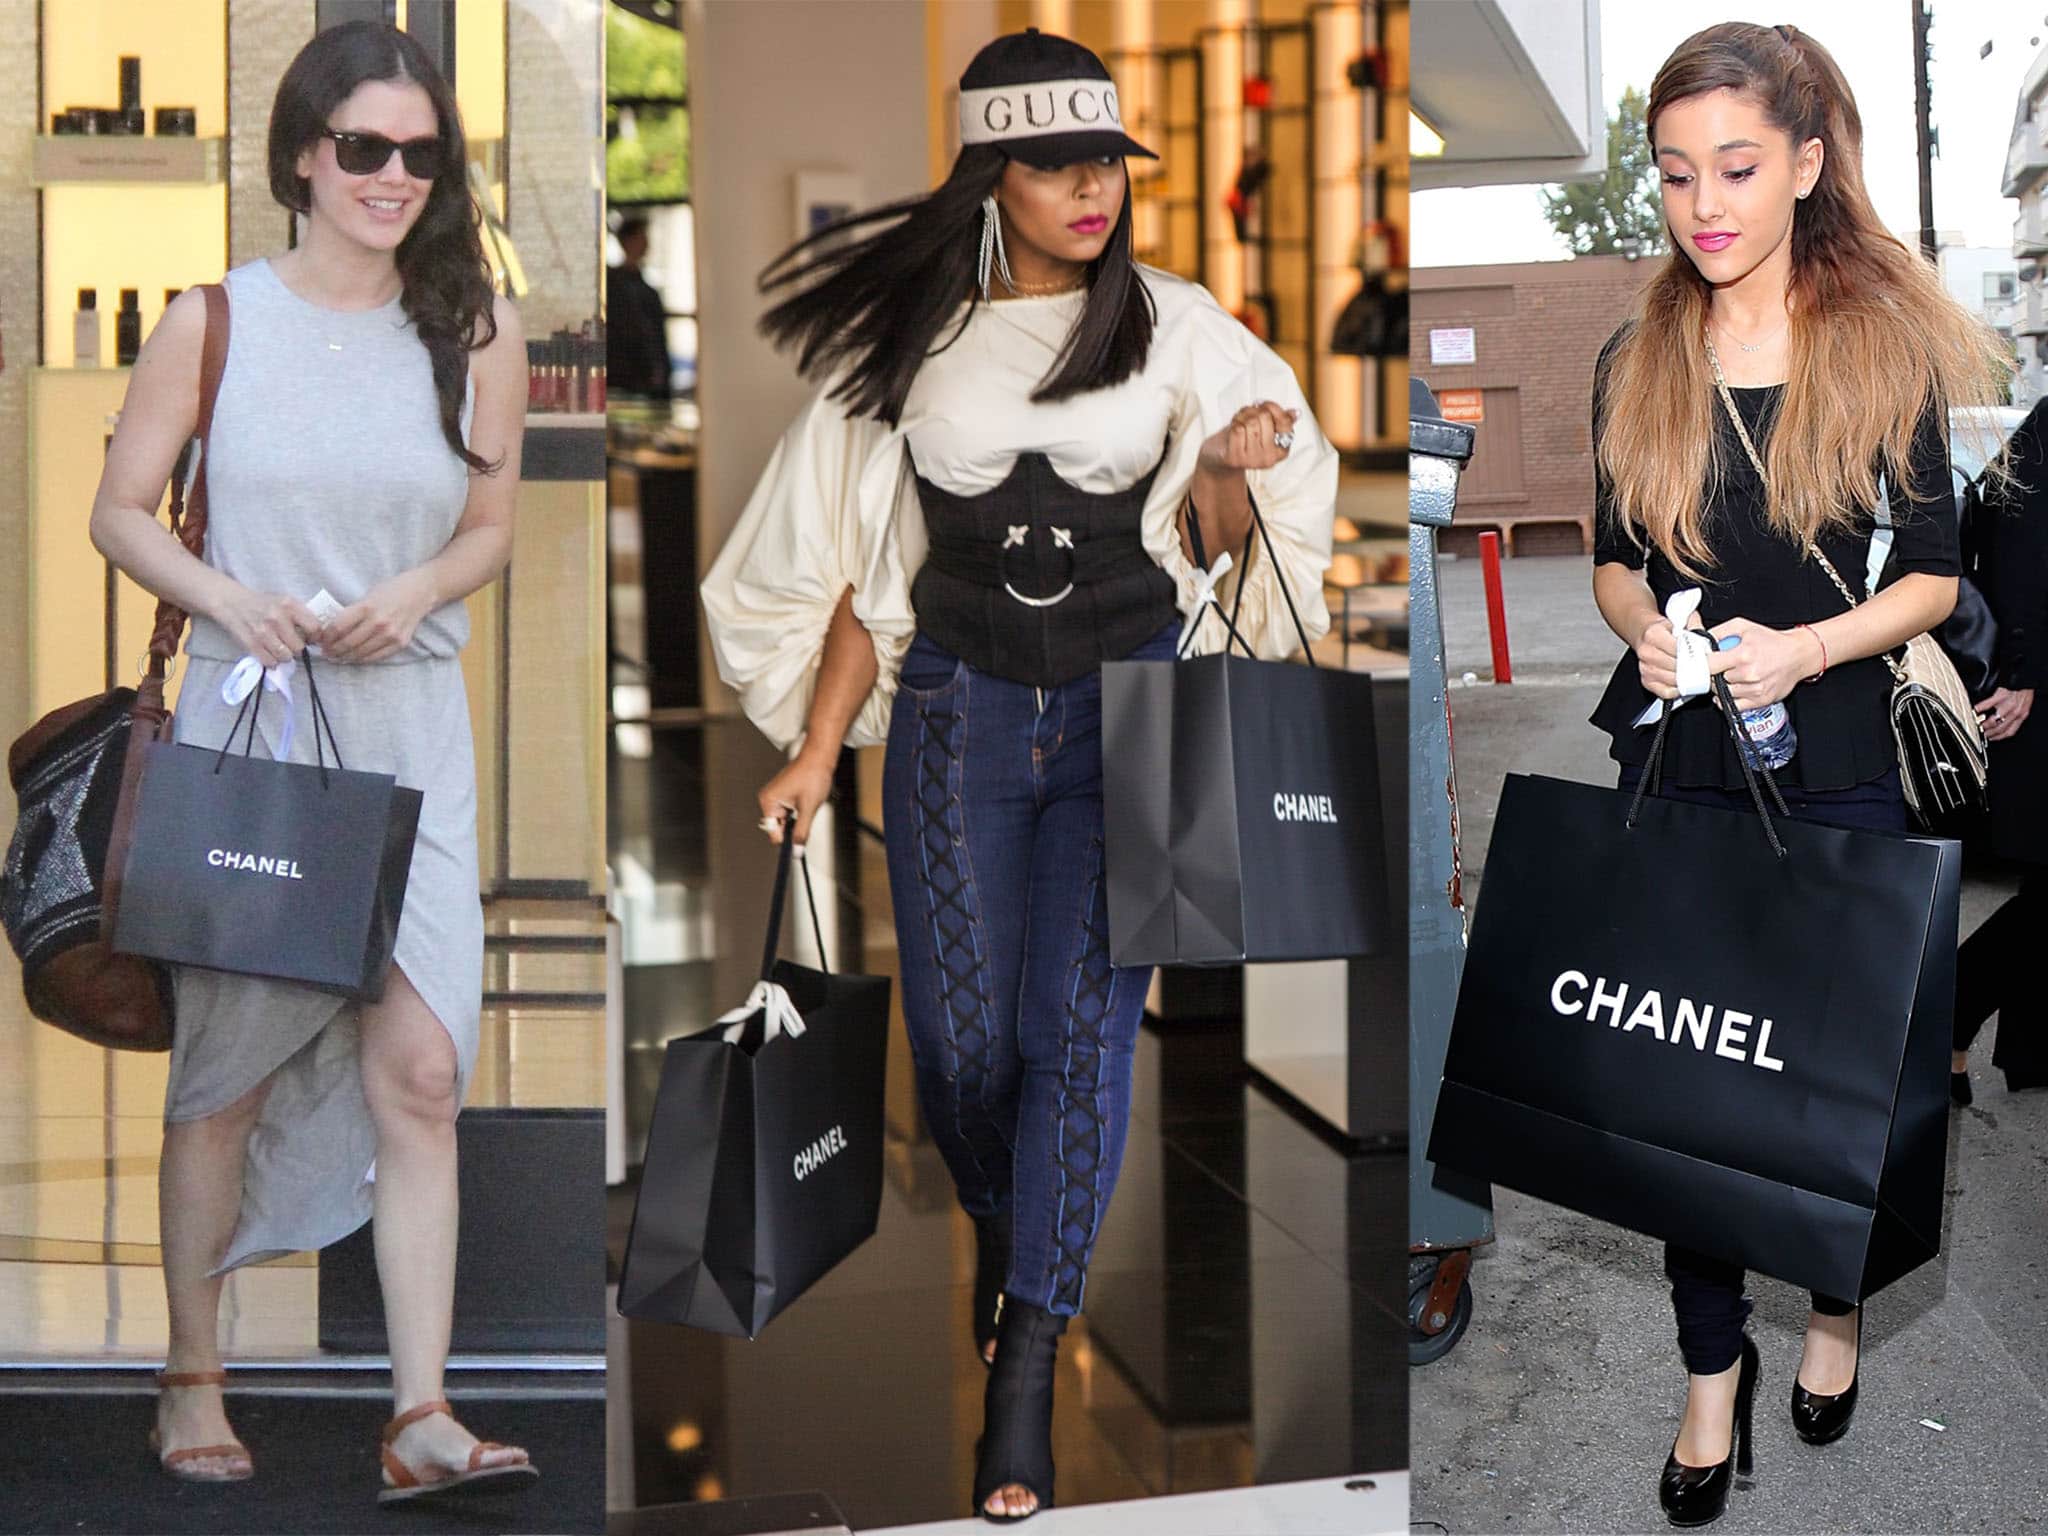 Rachel Bilson, Ashanti, and Ariana Grande shopping at Chanel stores in Los Angeles